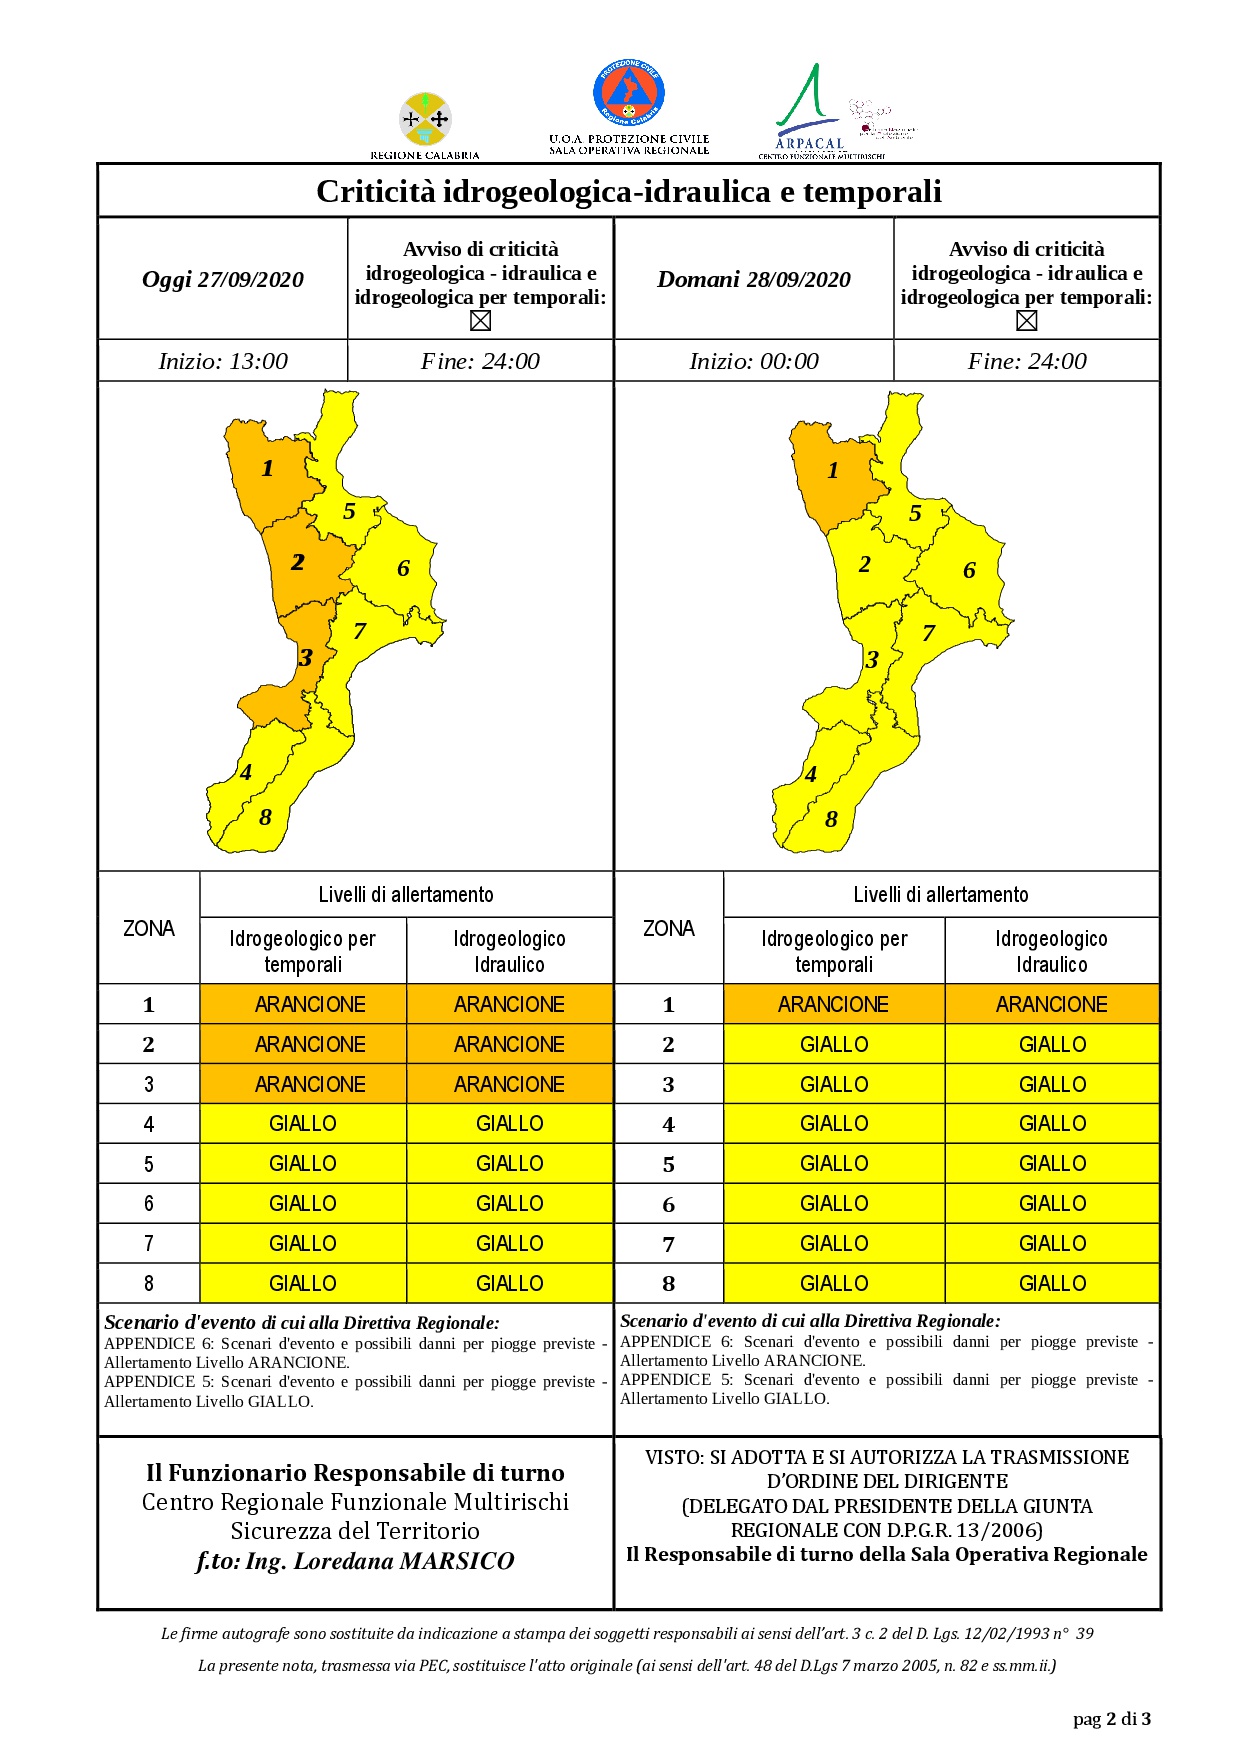 Criticità idrogeologica-idraulica e temporali in Calabria 27-09-2020